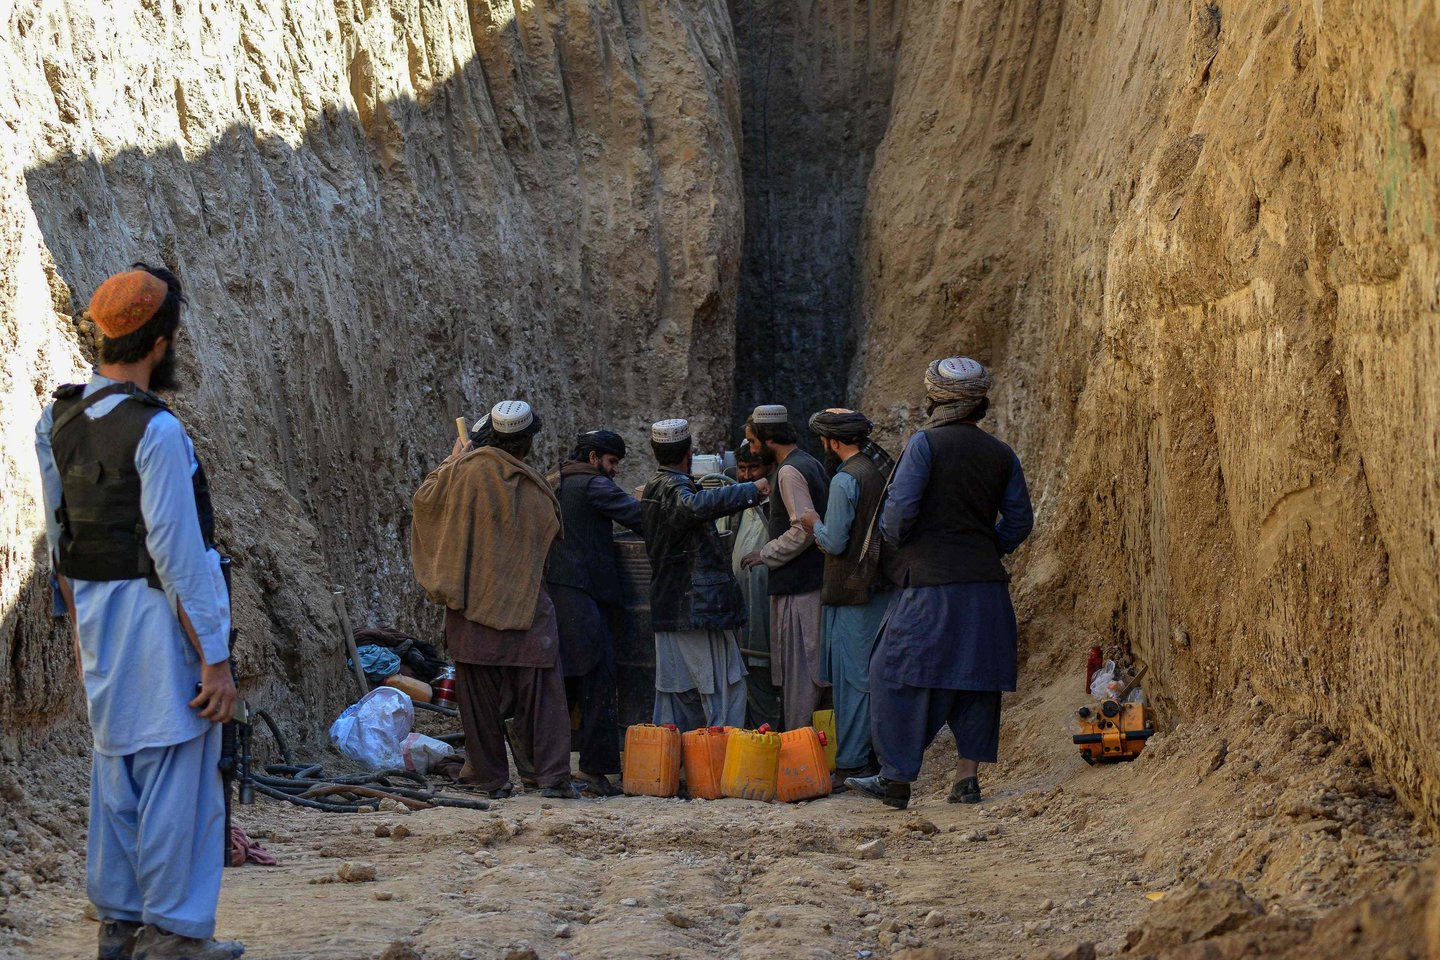 Tris dienas šulinyje Afganistane įstrigęs berniukas ištrauktas mirė.<br>AFP/Scanpix nuotr.